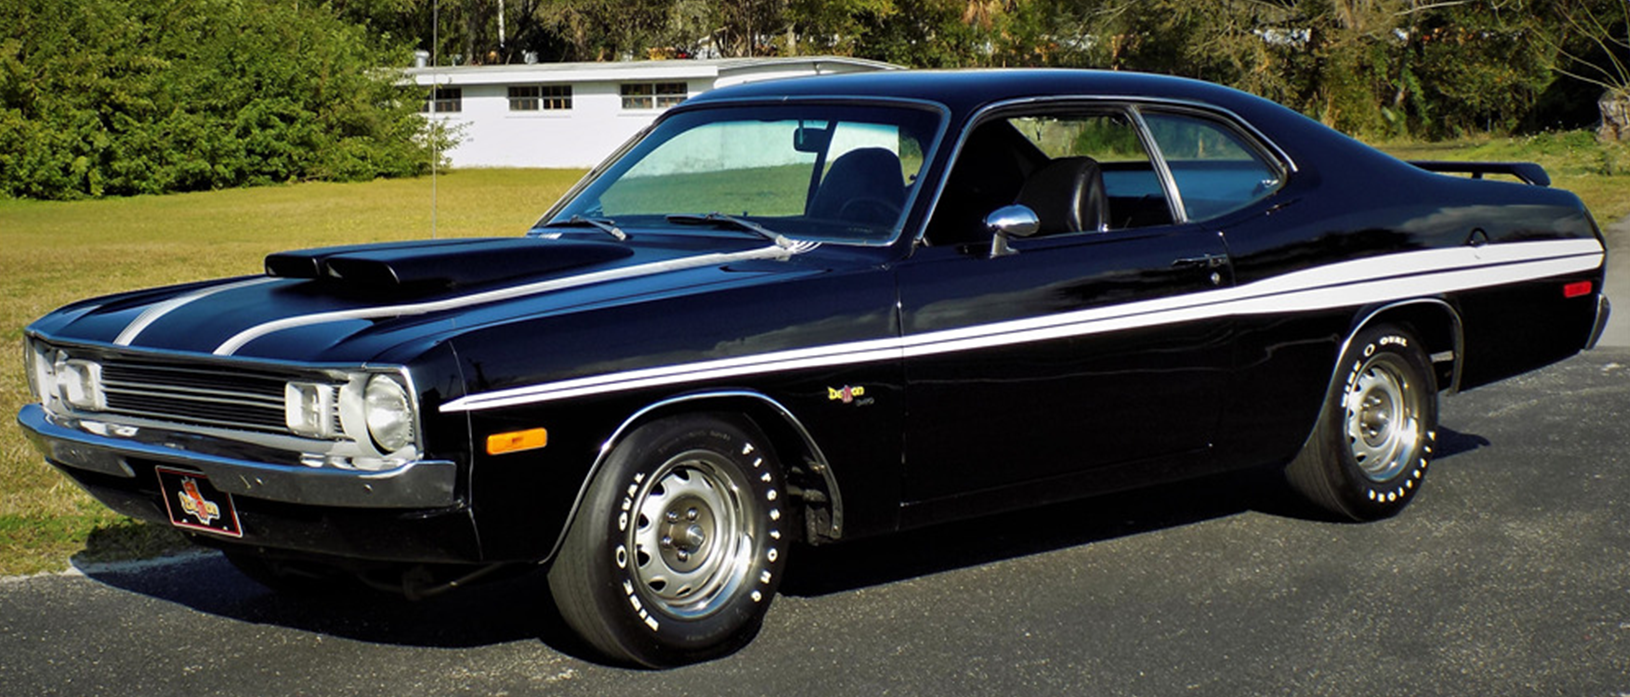 1972 Dodge Demon 340 black with white side stripe